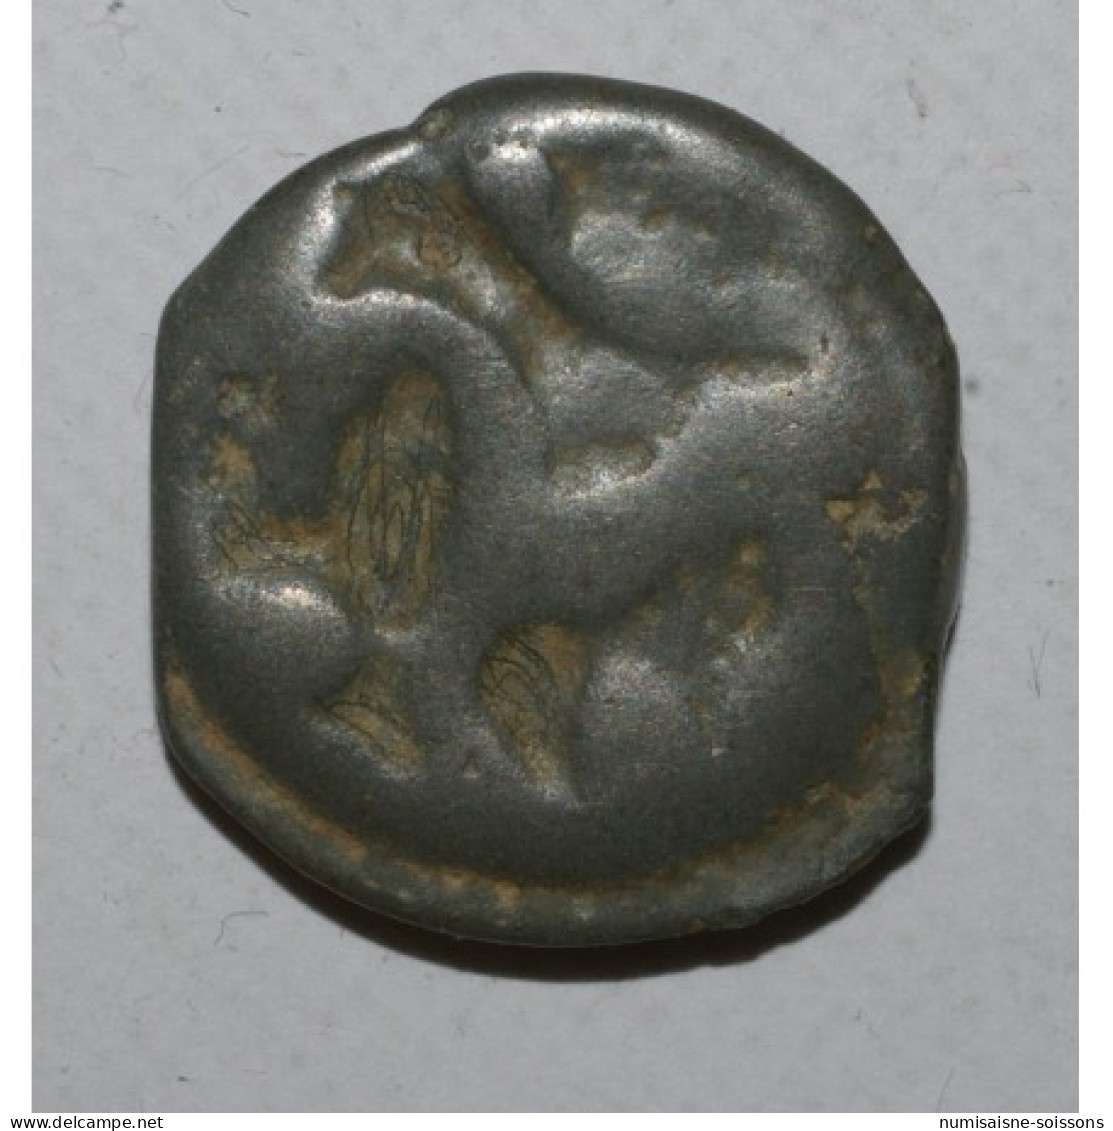 SENONS - REGION DE SENS - POTIN A LA TETE D'INDIEN - TB - Keltische Münzen